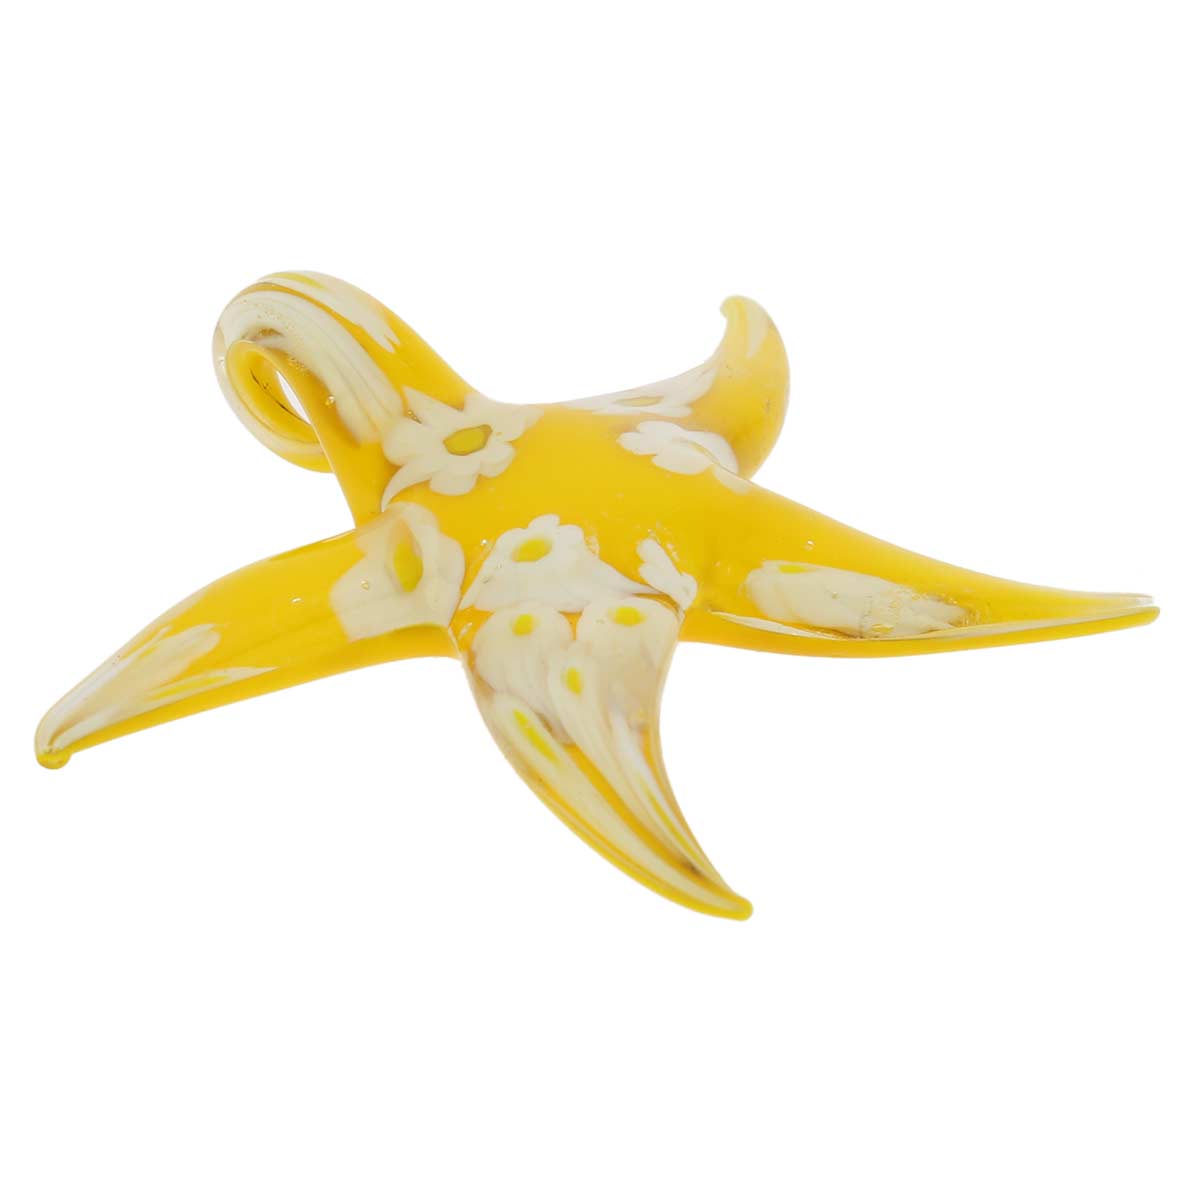 Yellow Daisy Starfish Pendant